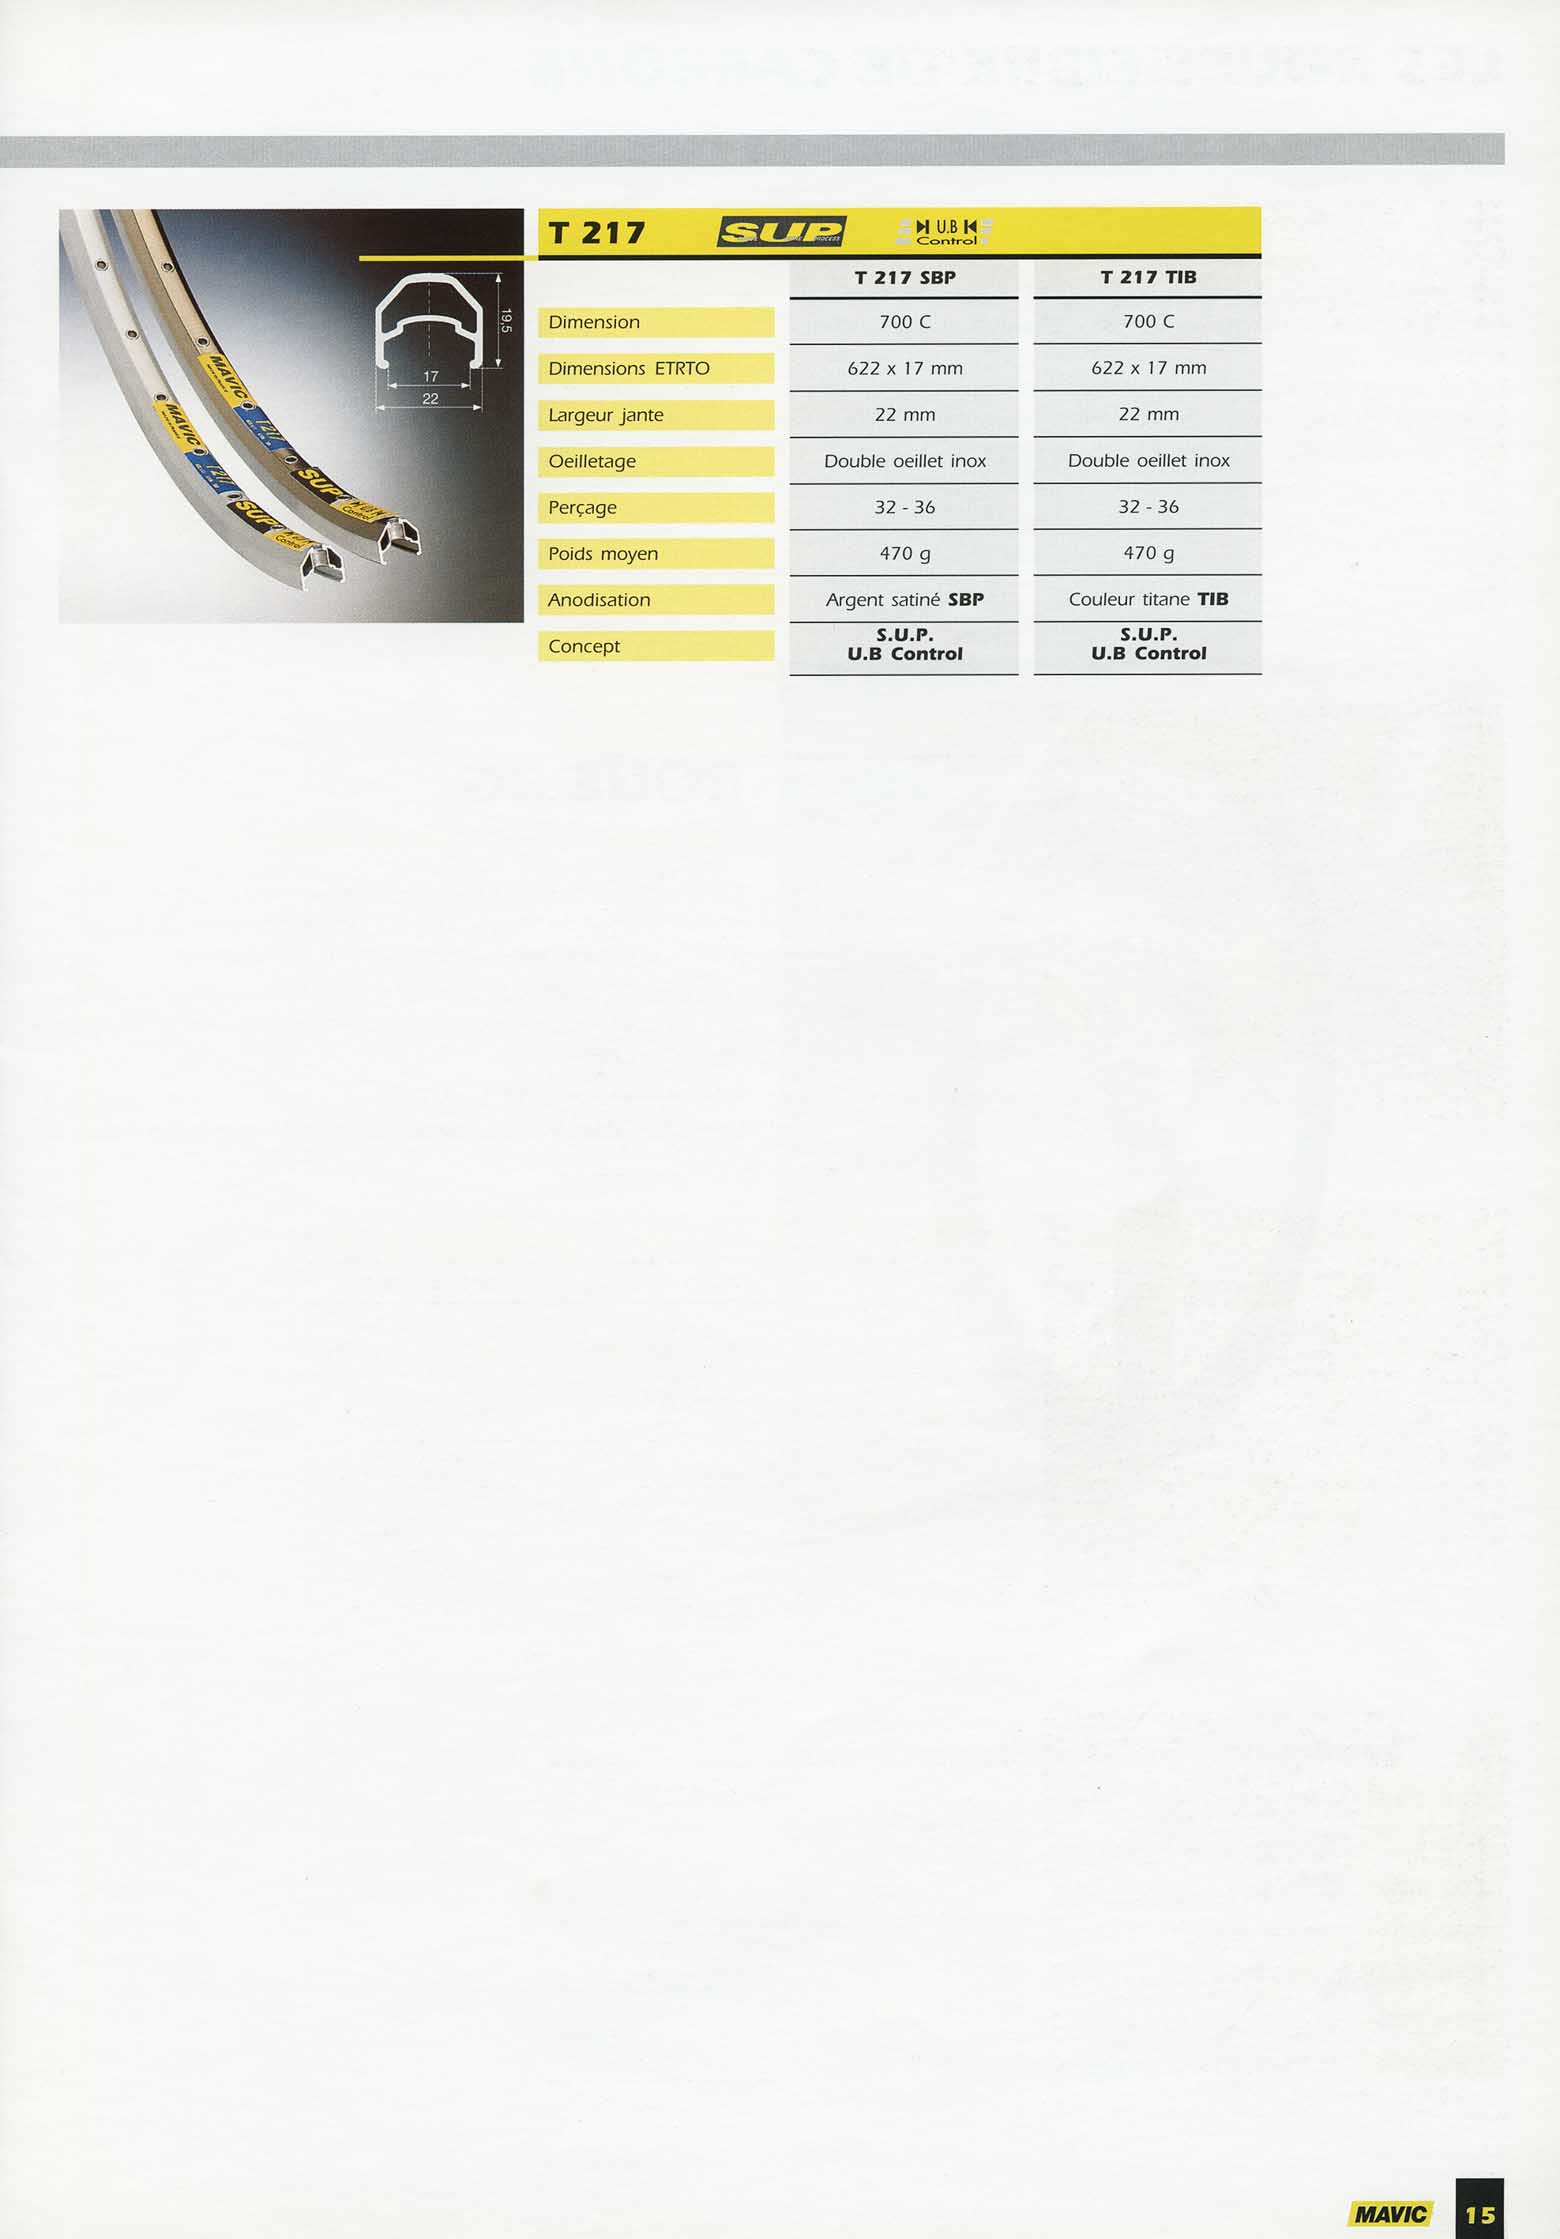 MAVIC Catalogue 1994 scan 15 main image